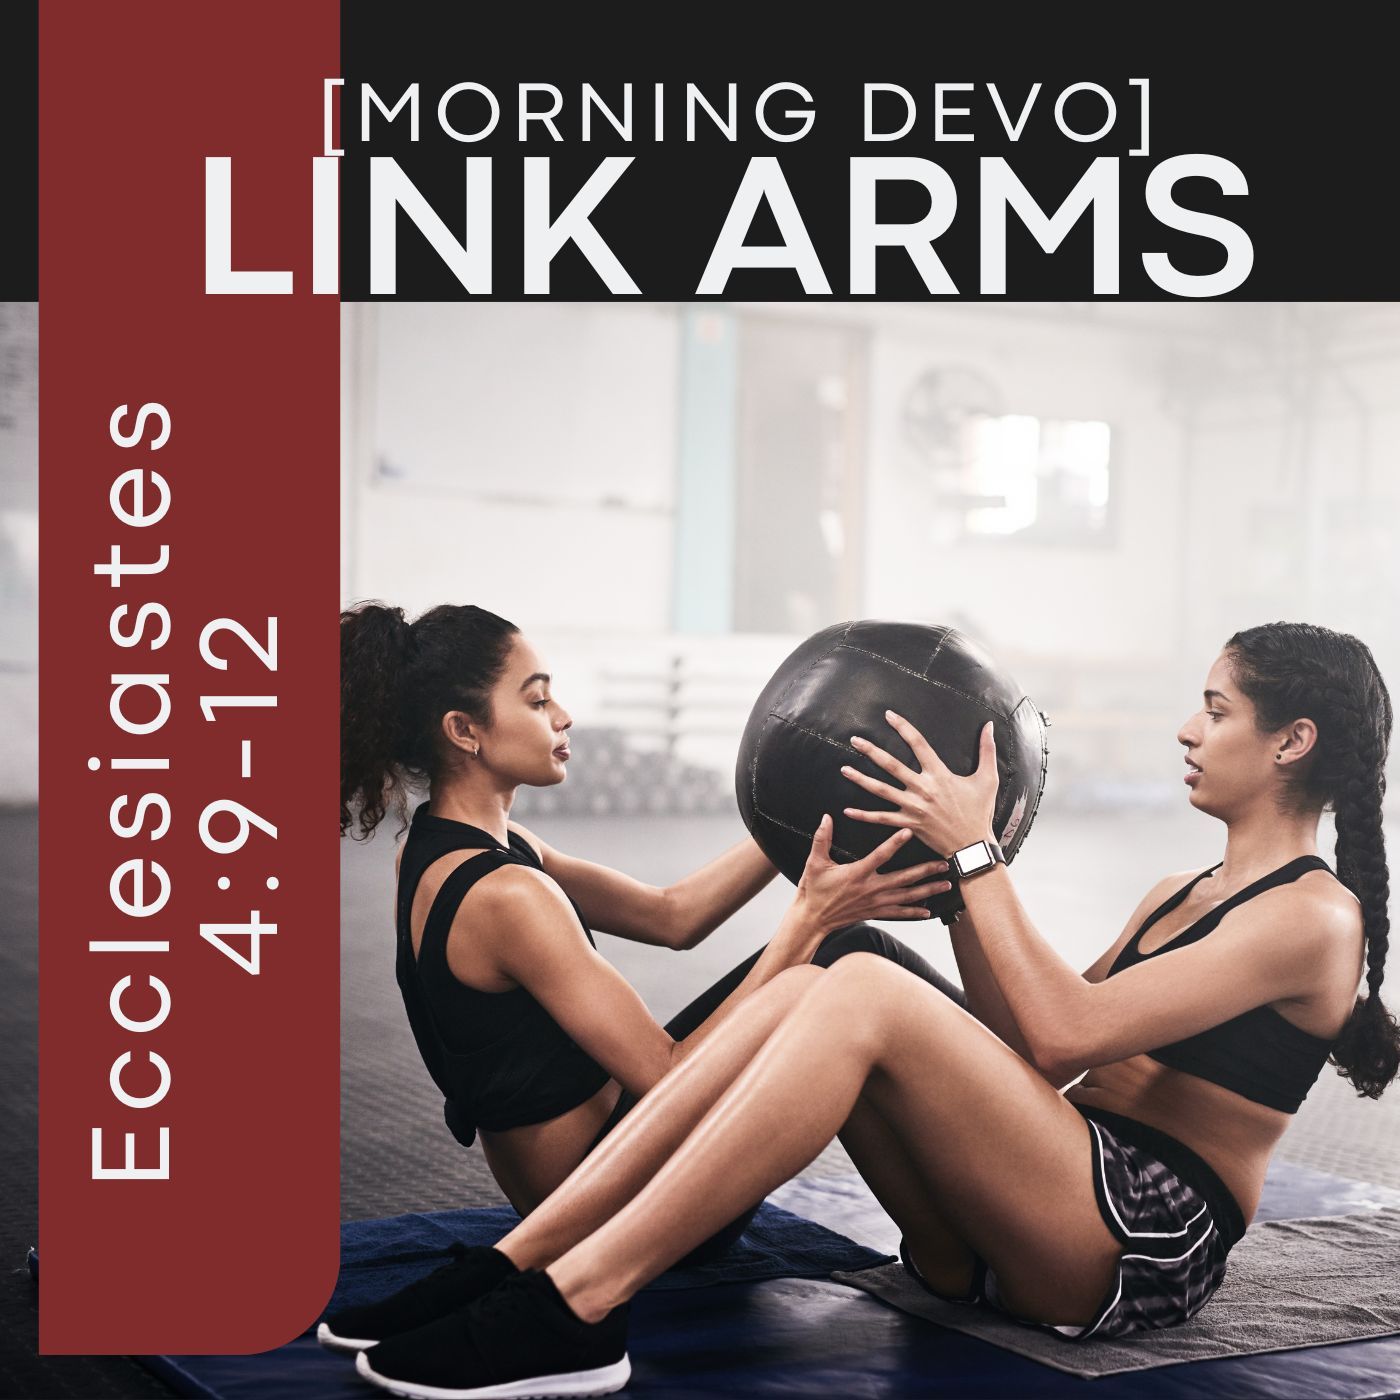 Link Arms [Morning Devo]